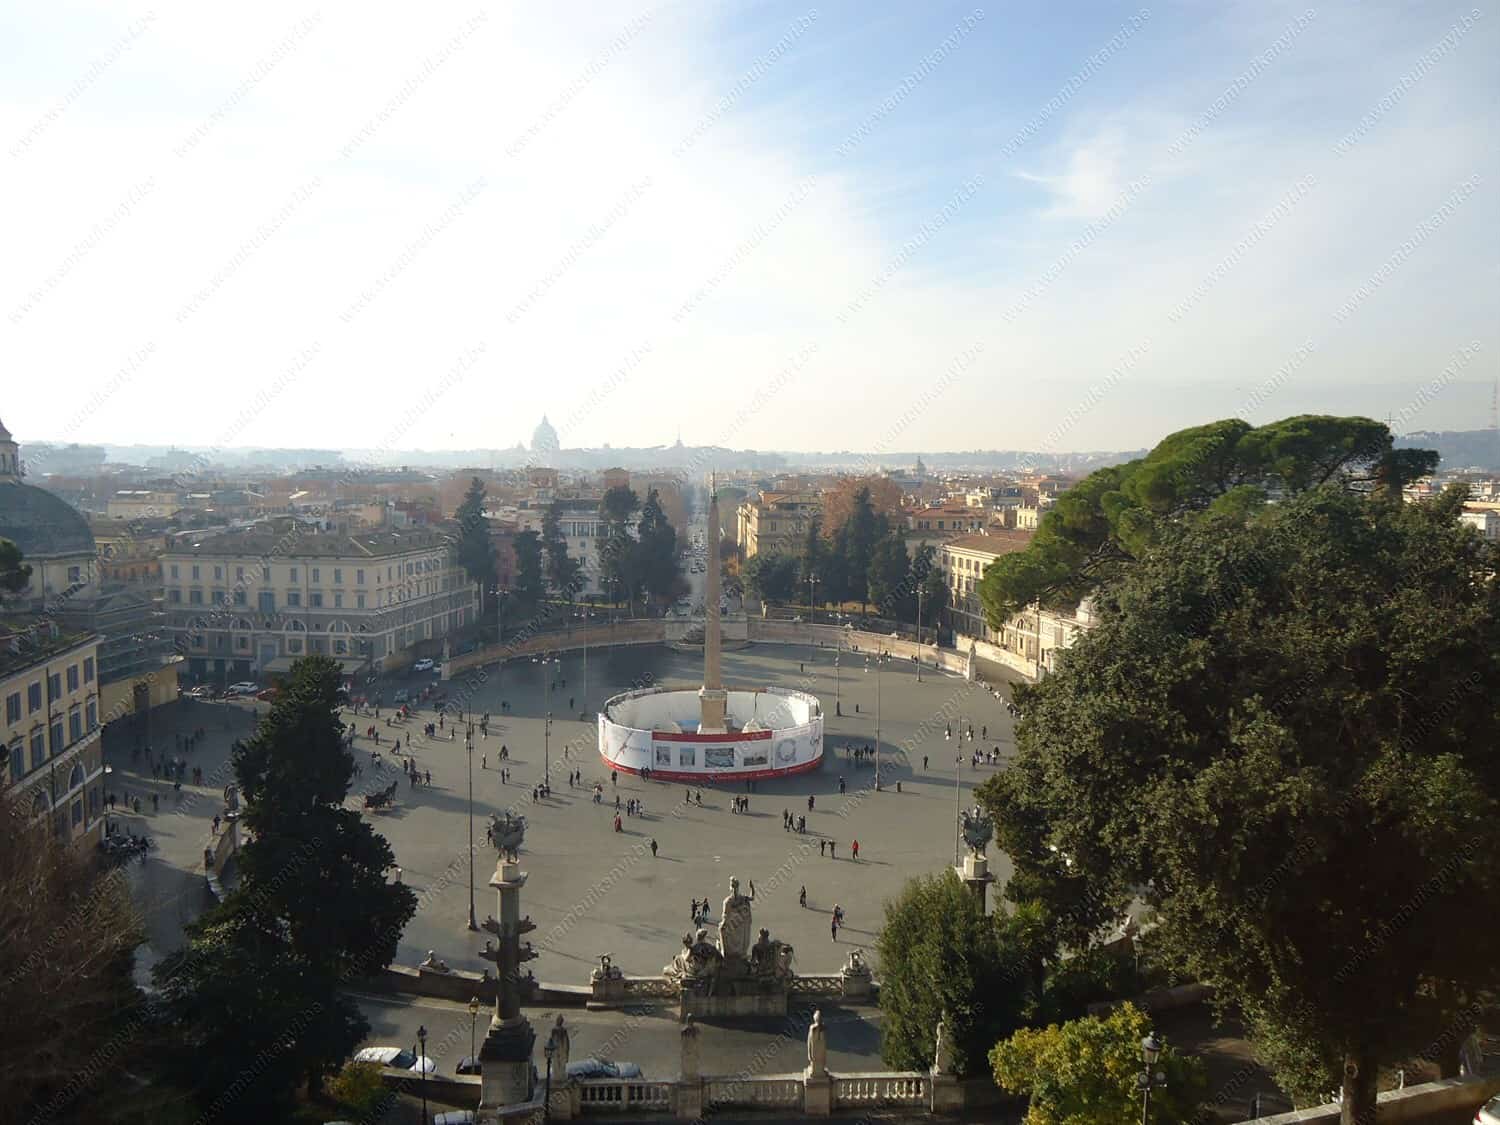 Panaromic view of Rome